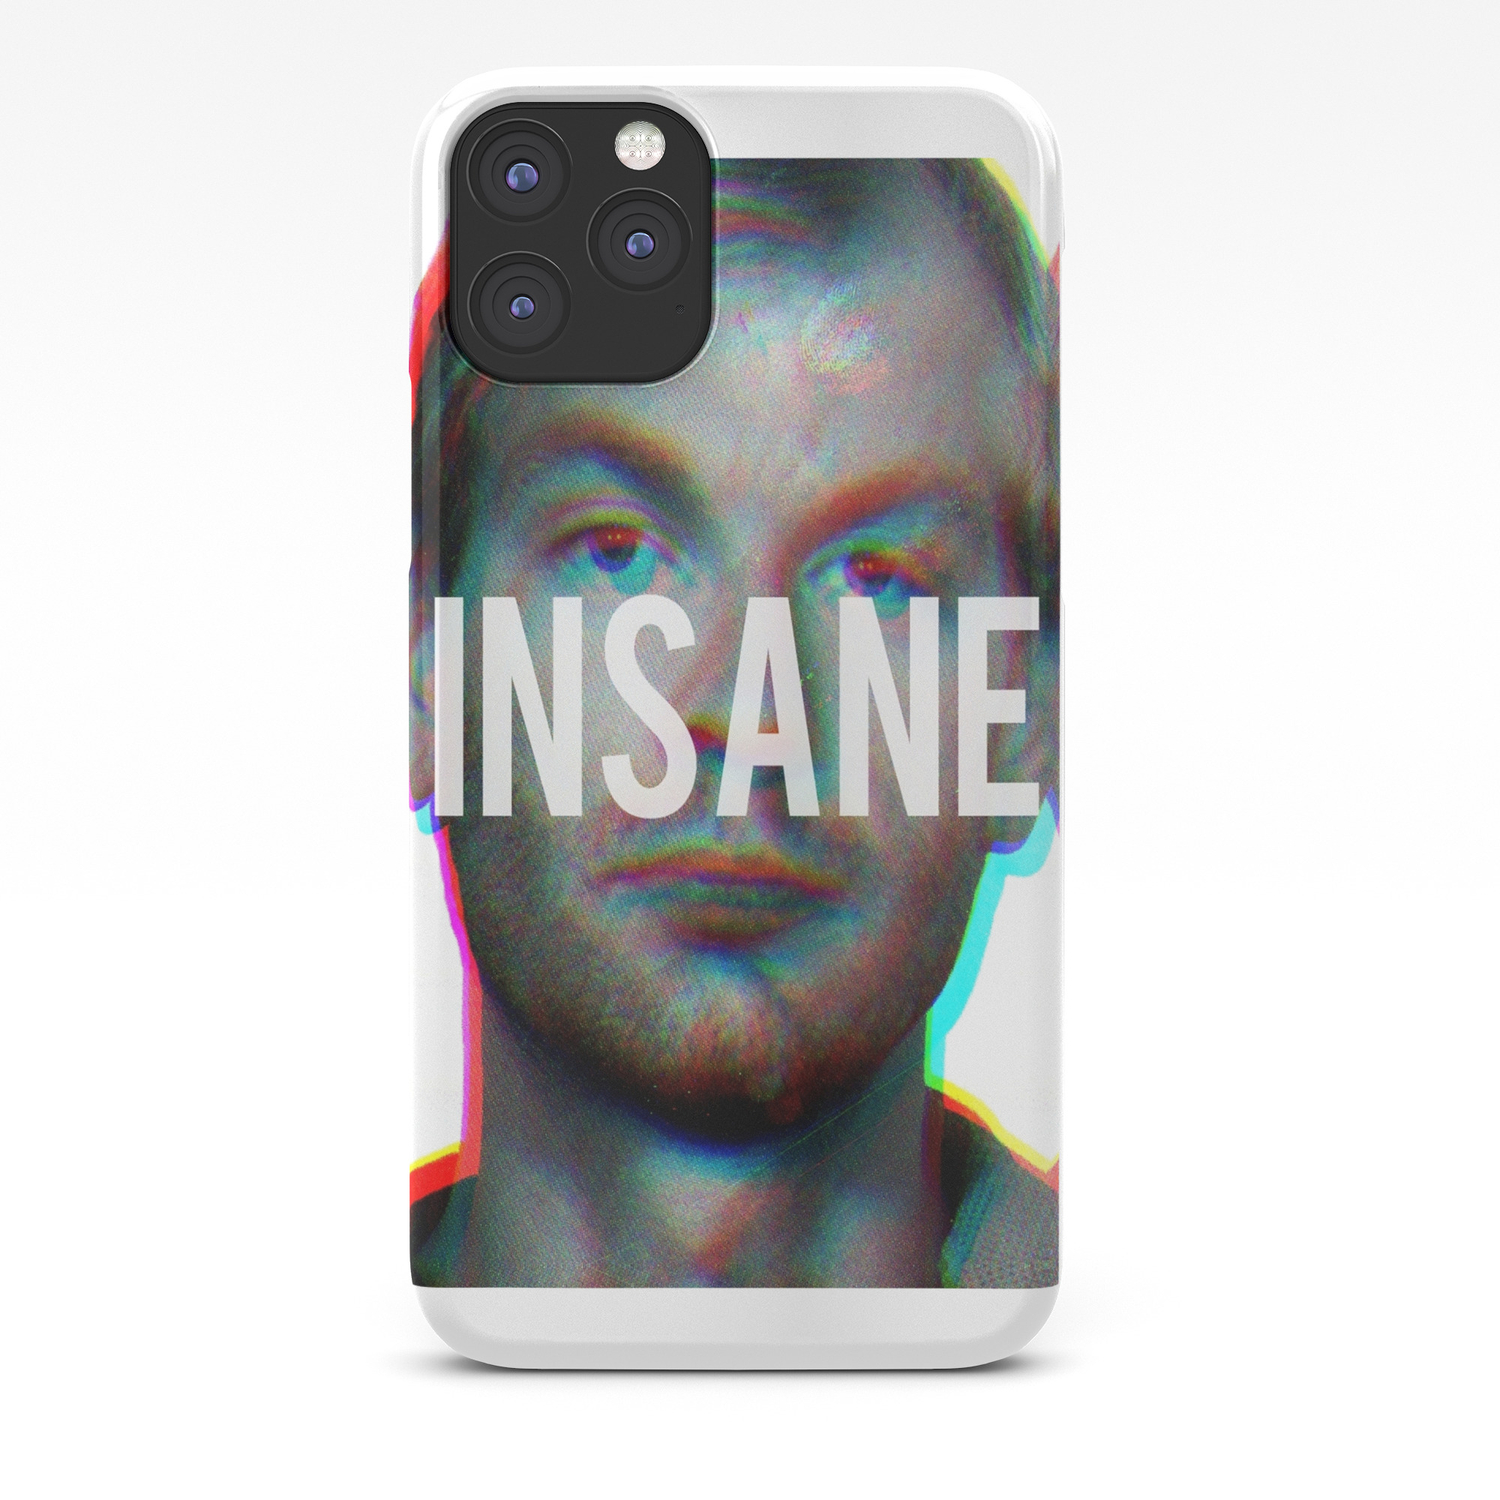 Insane Jeffrey Dahmer Iphone Case - 